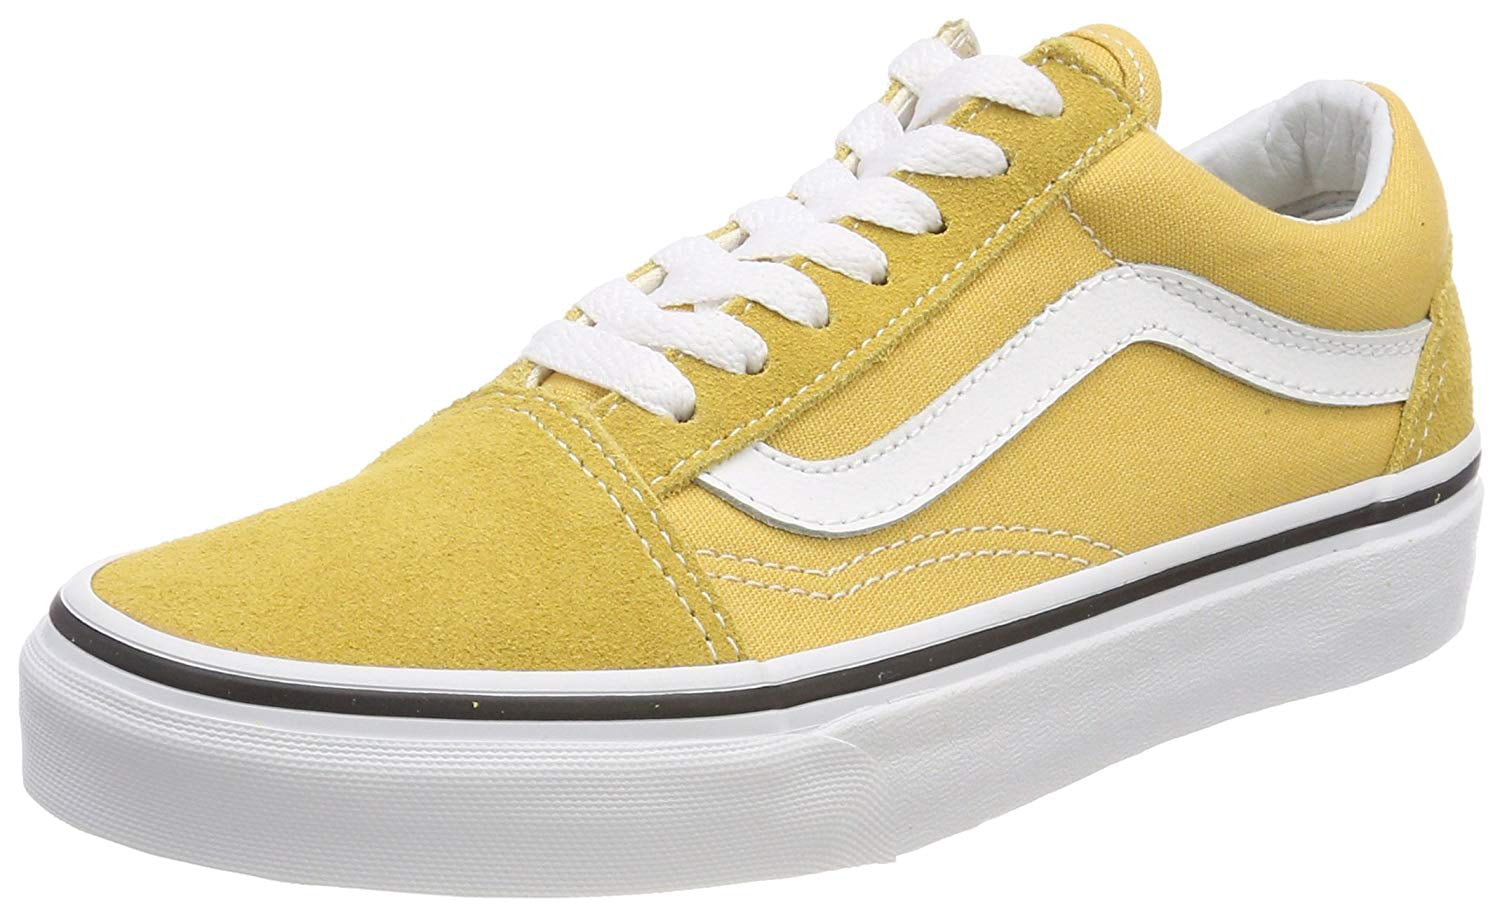 classic vans yellow